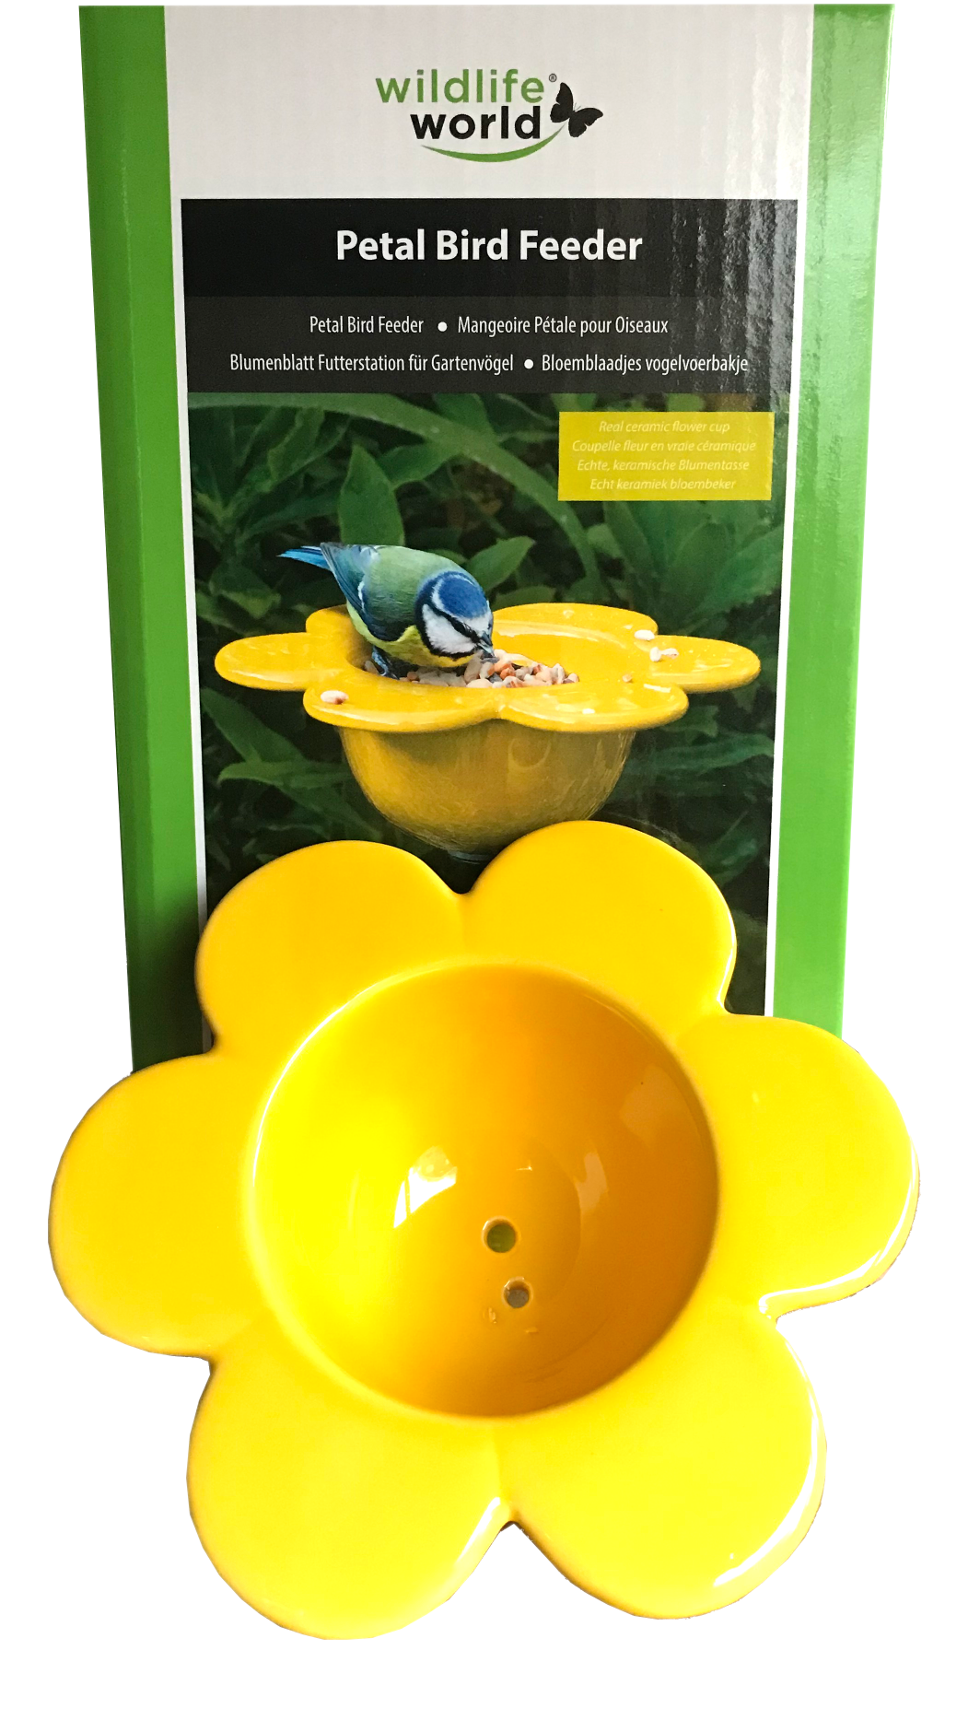 yellow ceramic flower bird feeder top, displayed against box packaging.